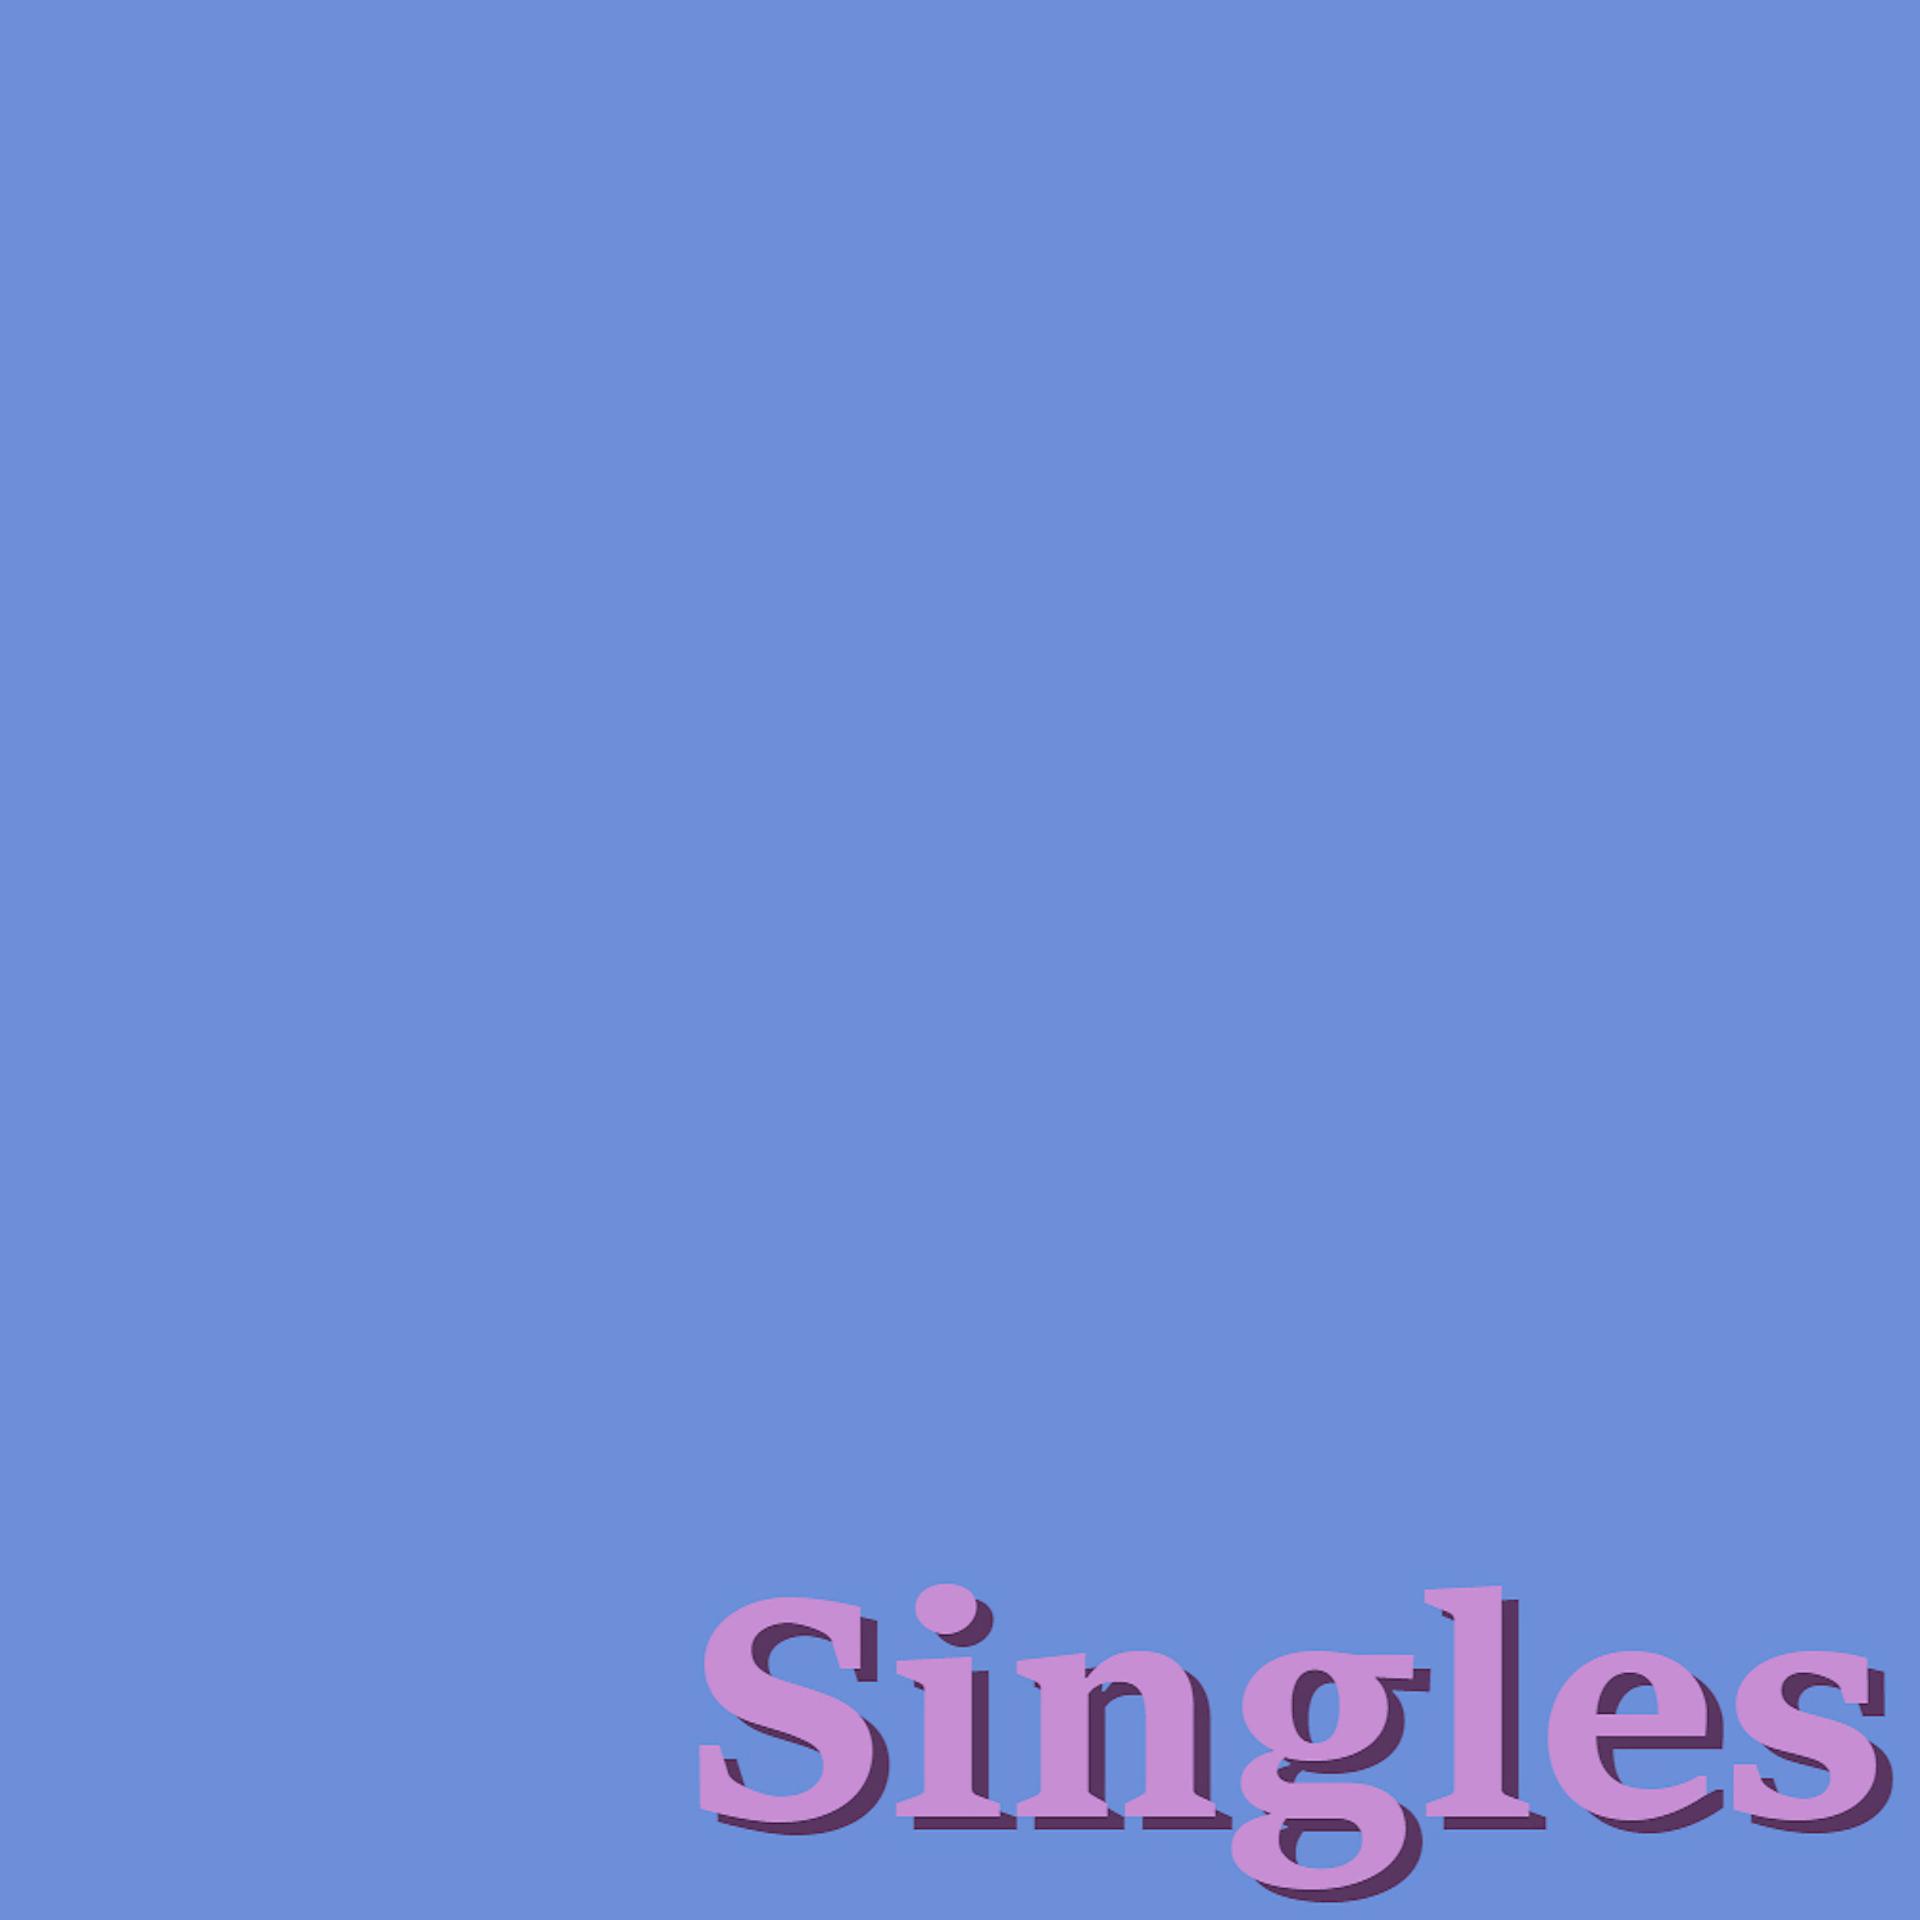 15 singles